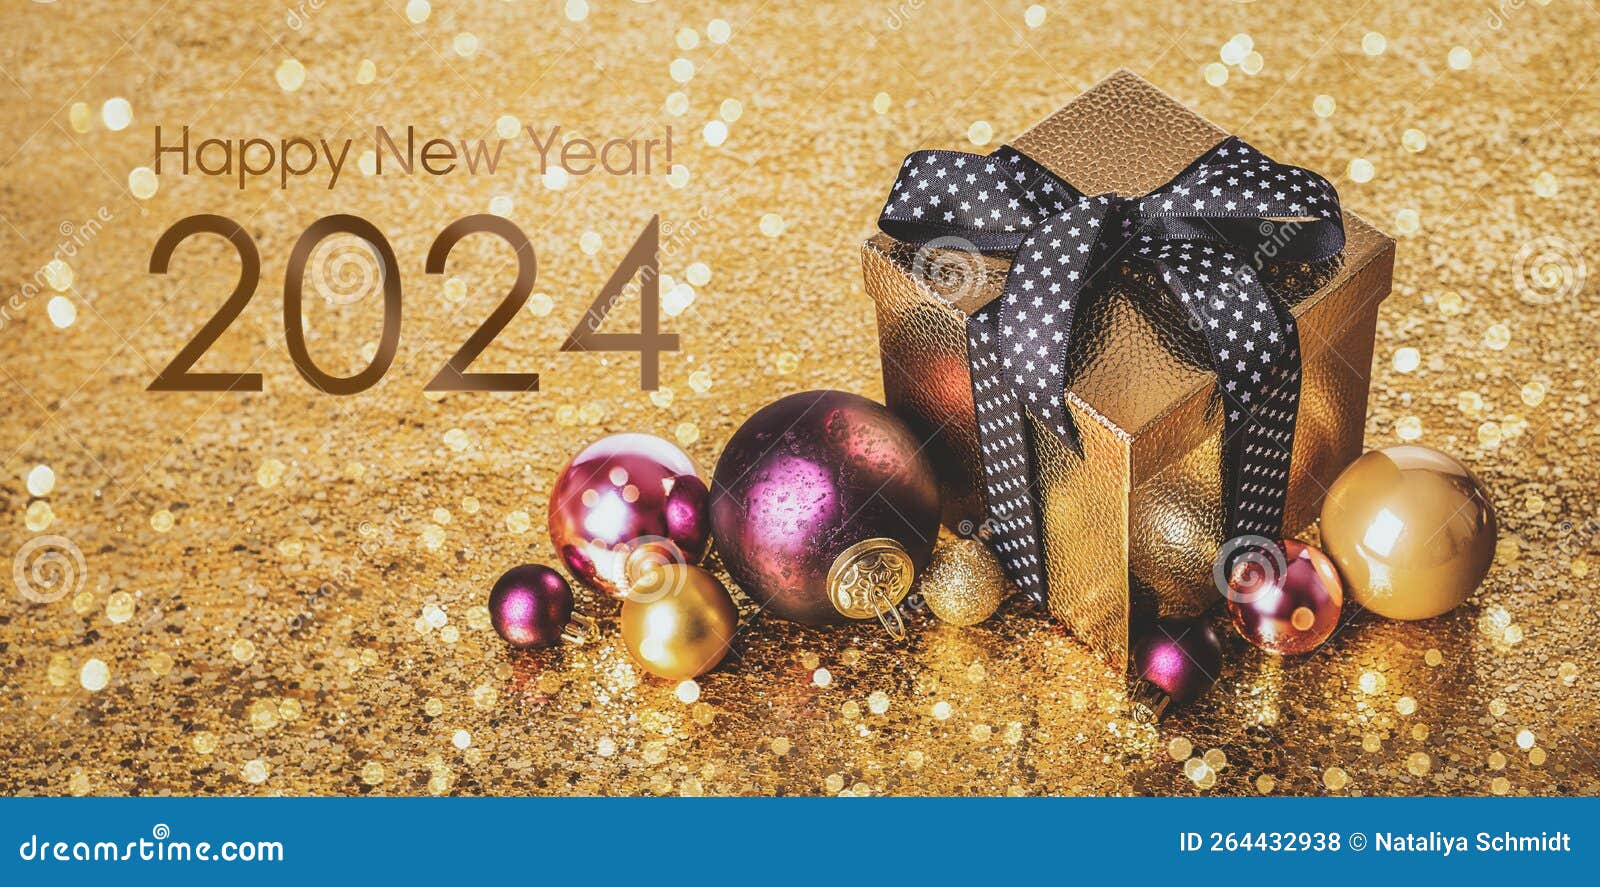 happy new year 2024! golden gift box